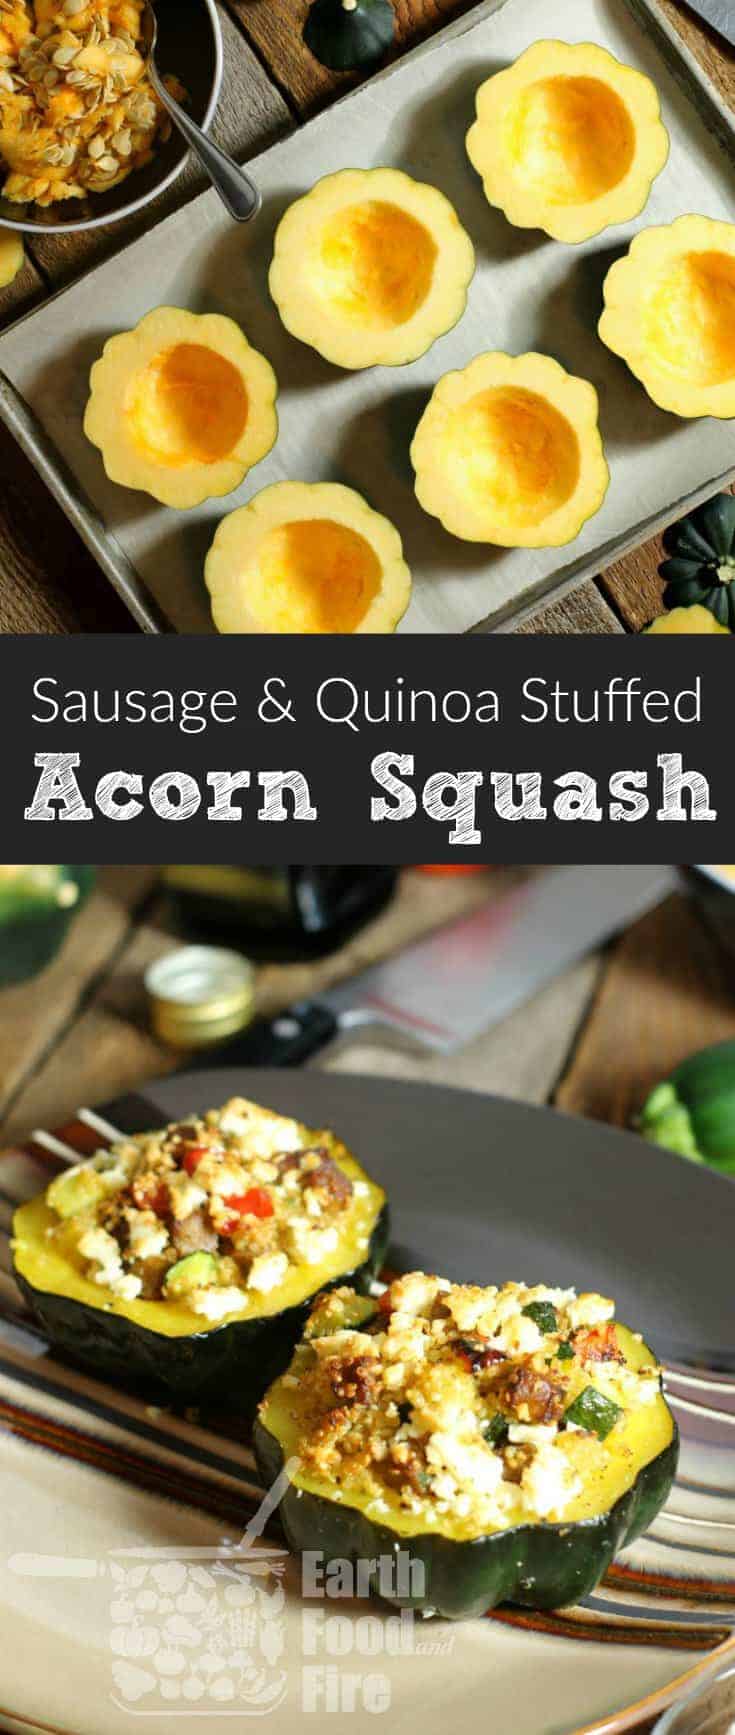 Quinoa & Sausage Stuffed Acorn Squash - Earth, Food, and Fire